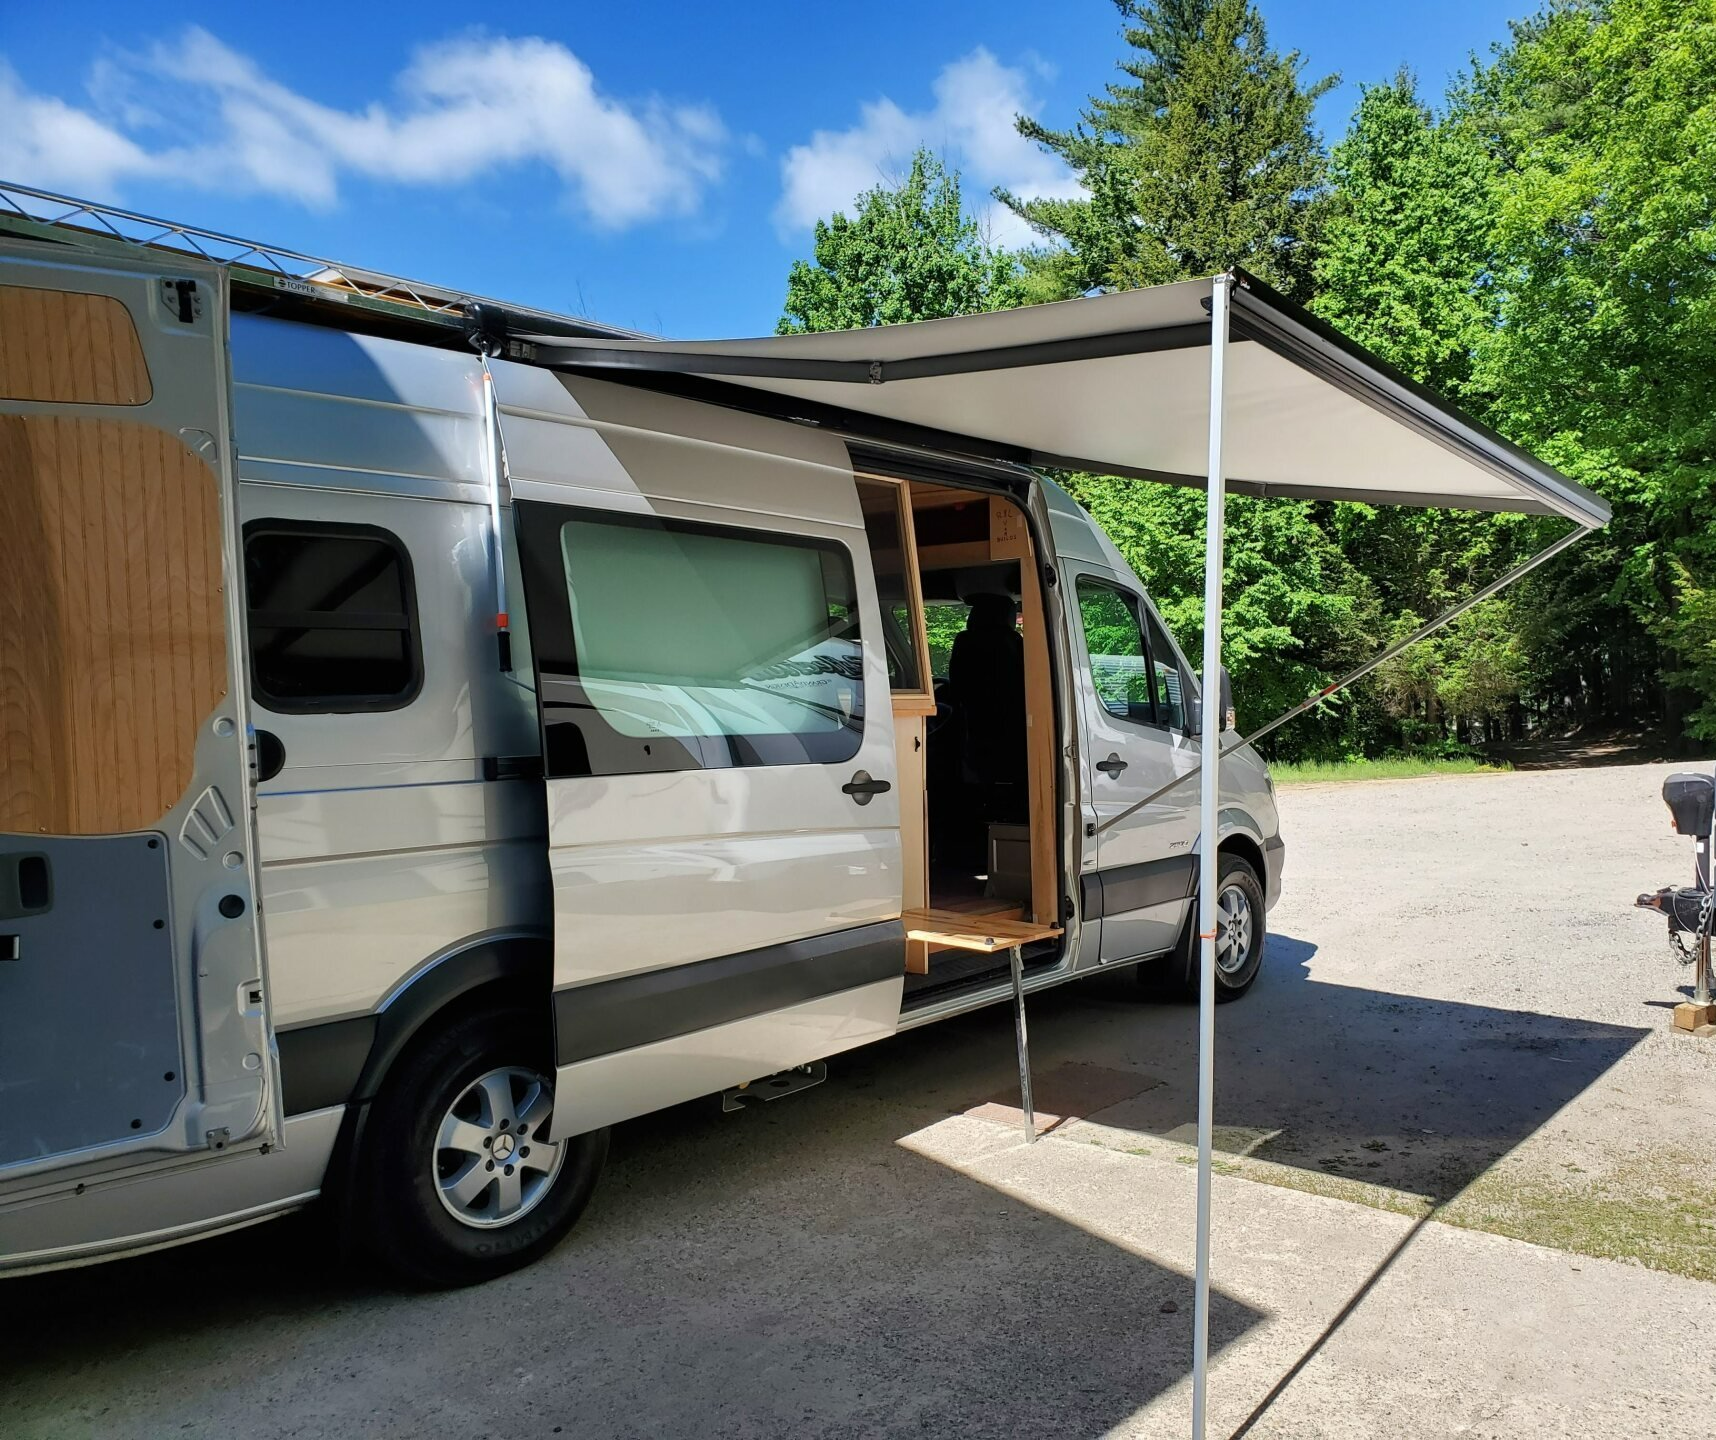 Parking The Grey Camper Van - Milton, NH   - RV Service and R & L Van Builds